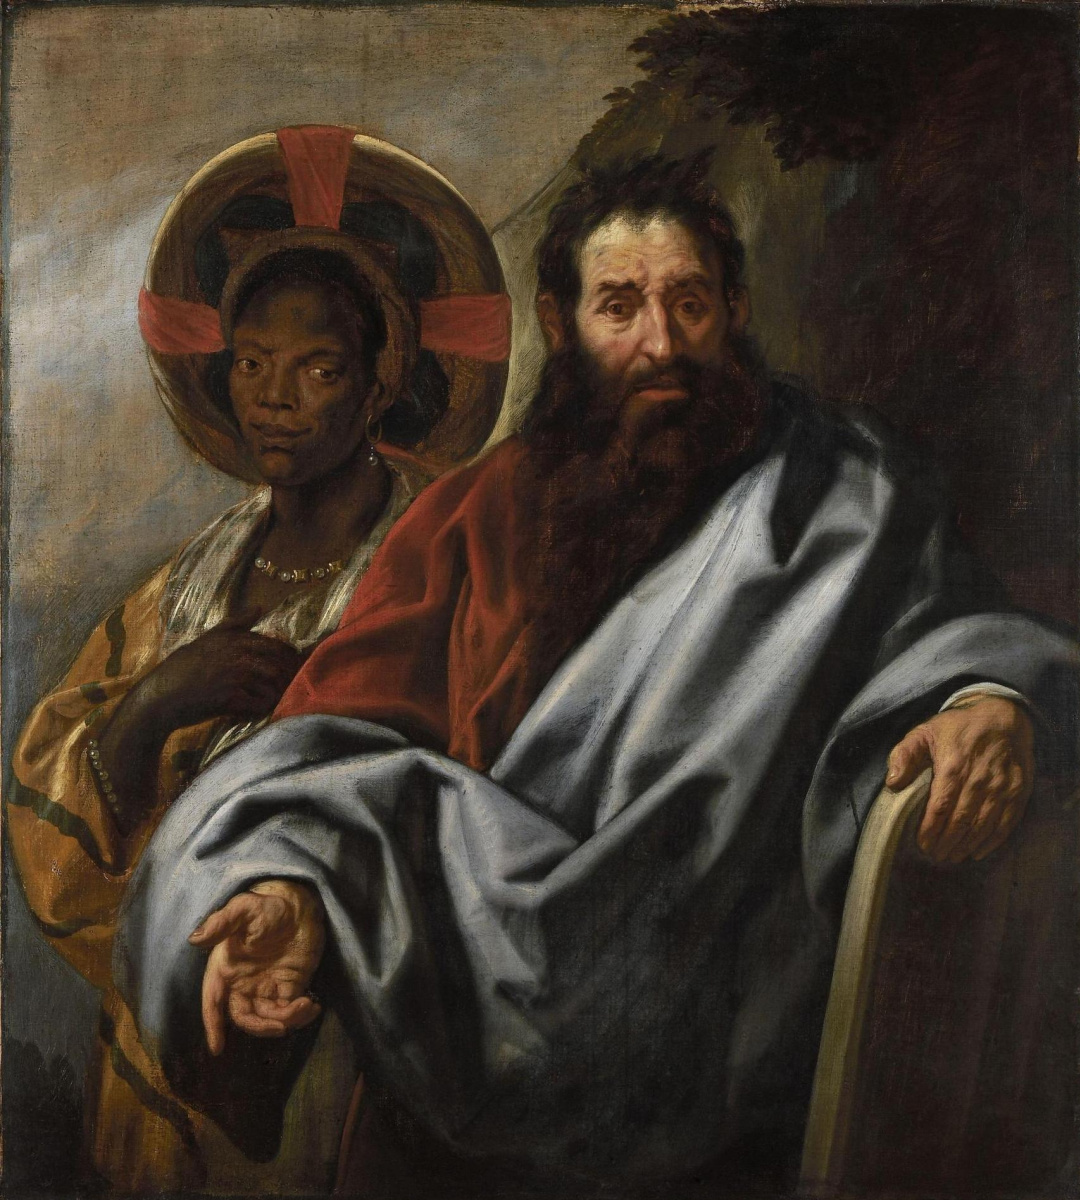 Jacob Jordaens. Moses and his Ethiopian wife Sifora